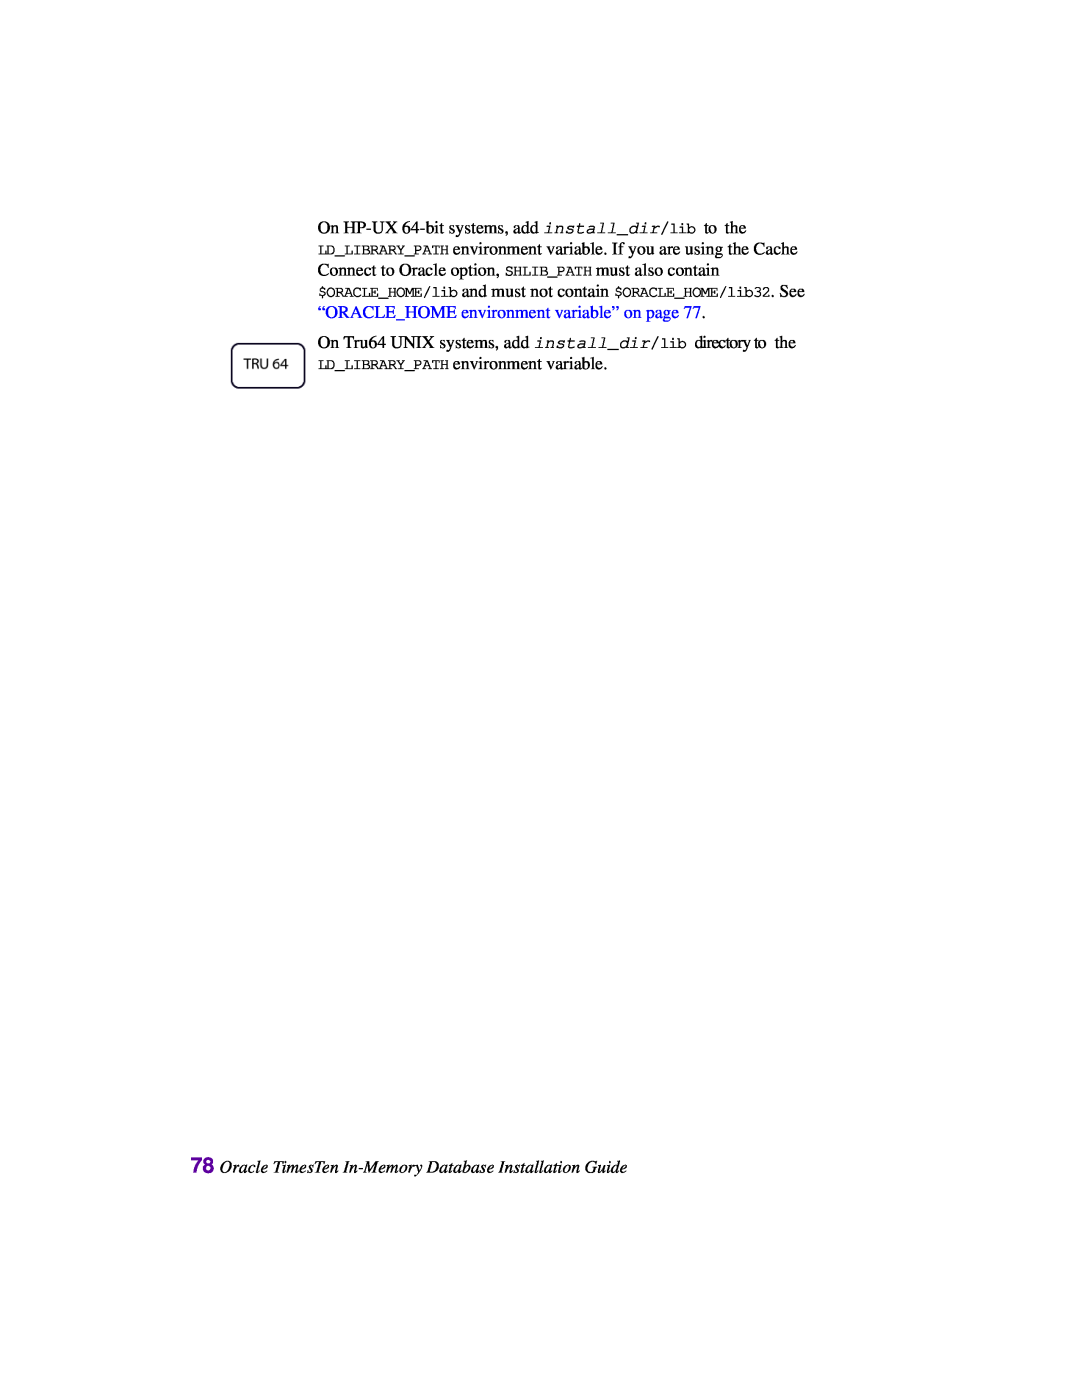 Oracle Audio Technologies B31679-01 manual On HP-UX 64-bit systems, add installdir/lib to the 